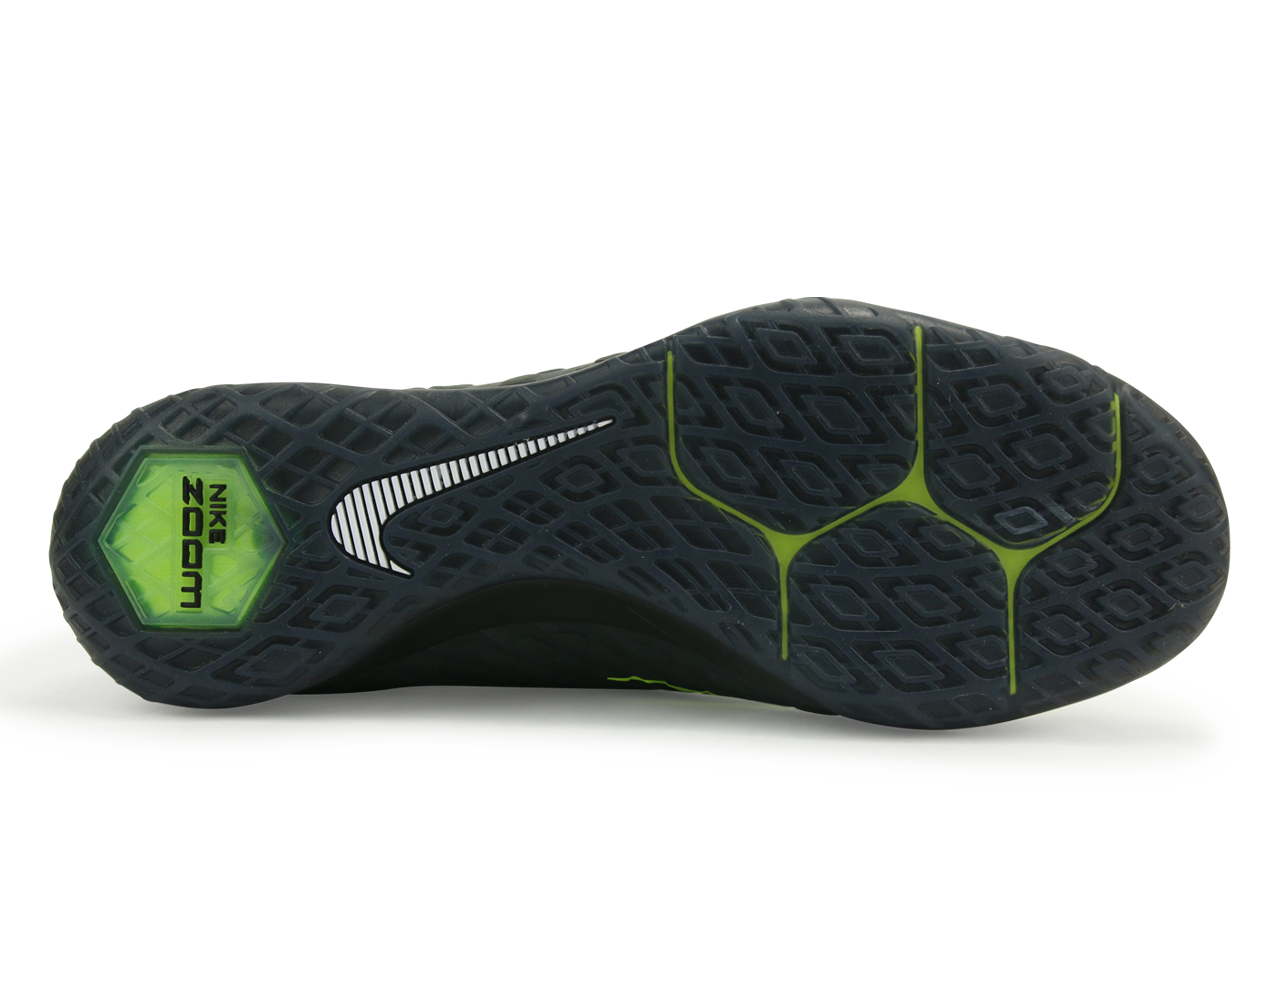 Nike Men's HypervenomX Proximo II DF Indoor Soccer Shoes Black/Volt/Dark Grey/Wolf Grey